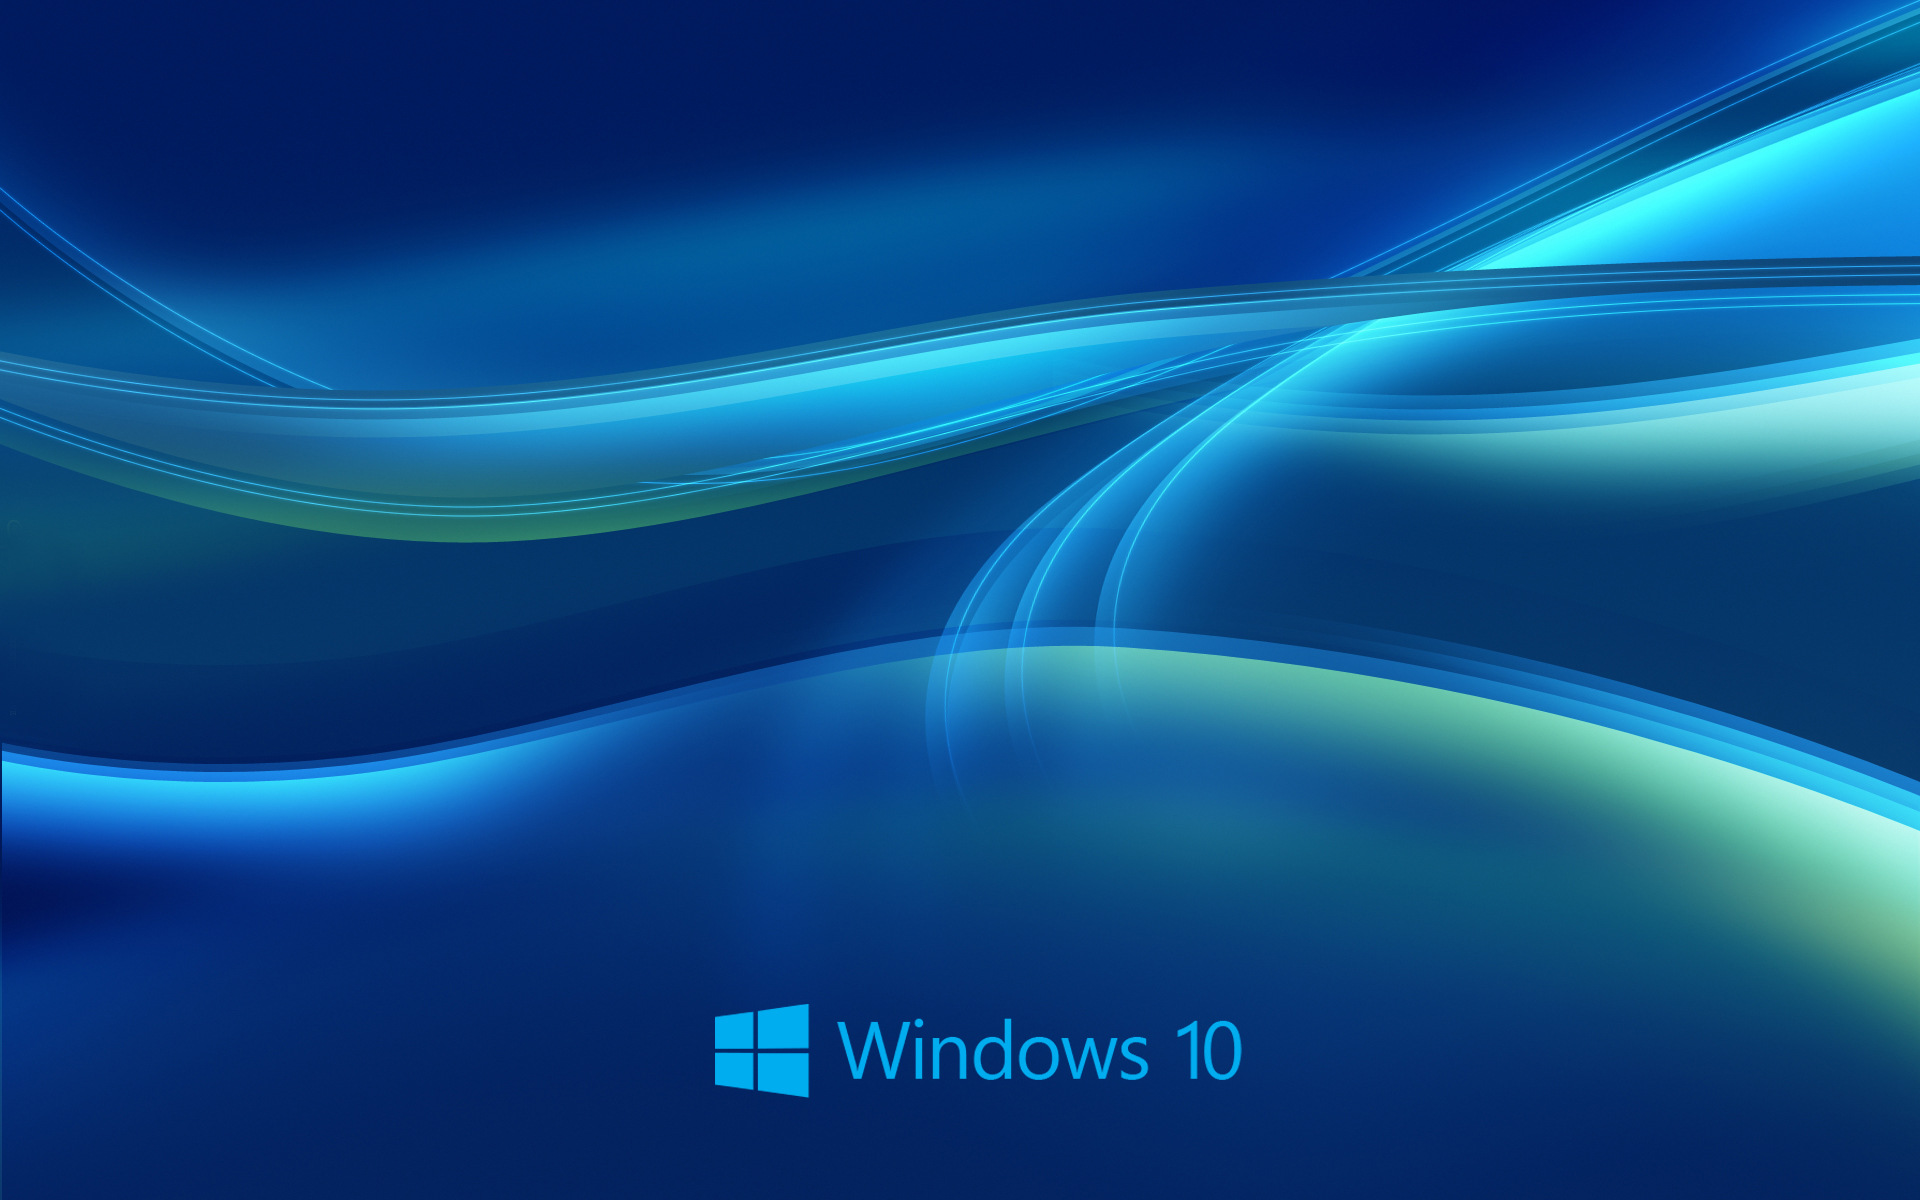 39+] Windows 10 Wallpapers Free Download - WallpaperSafari